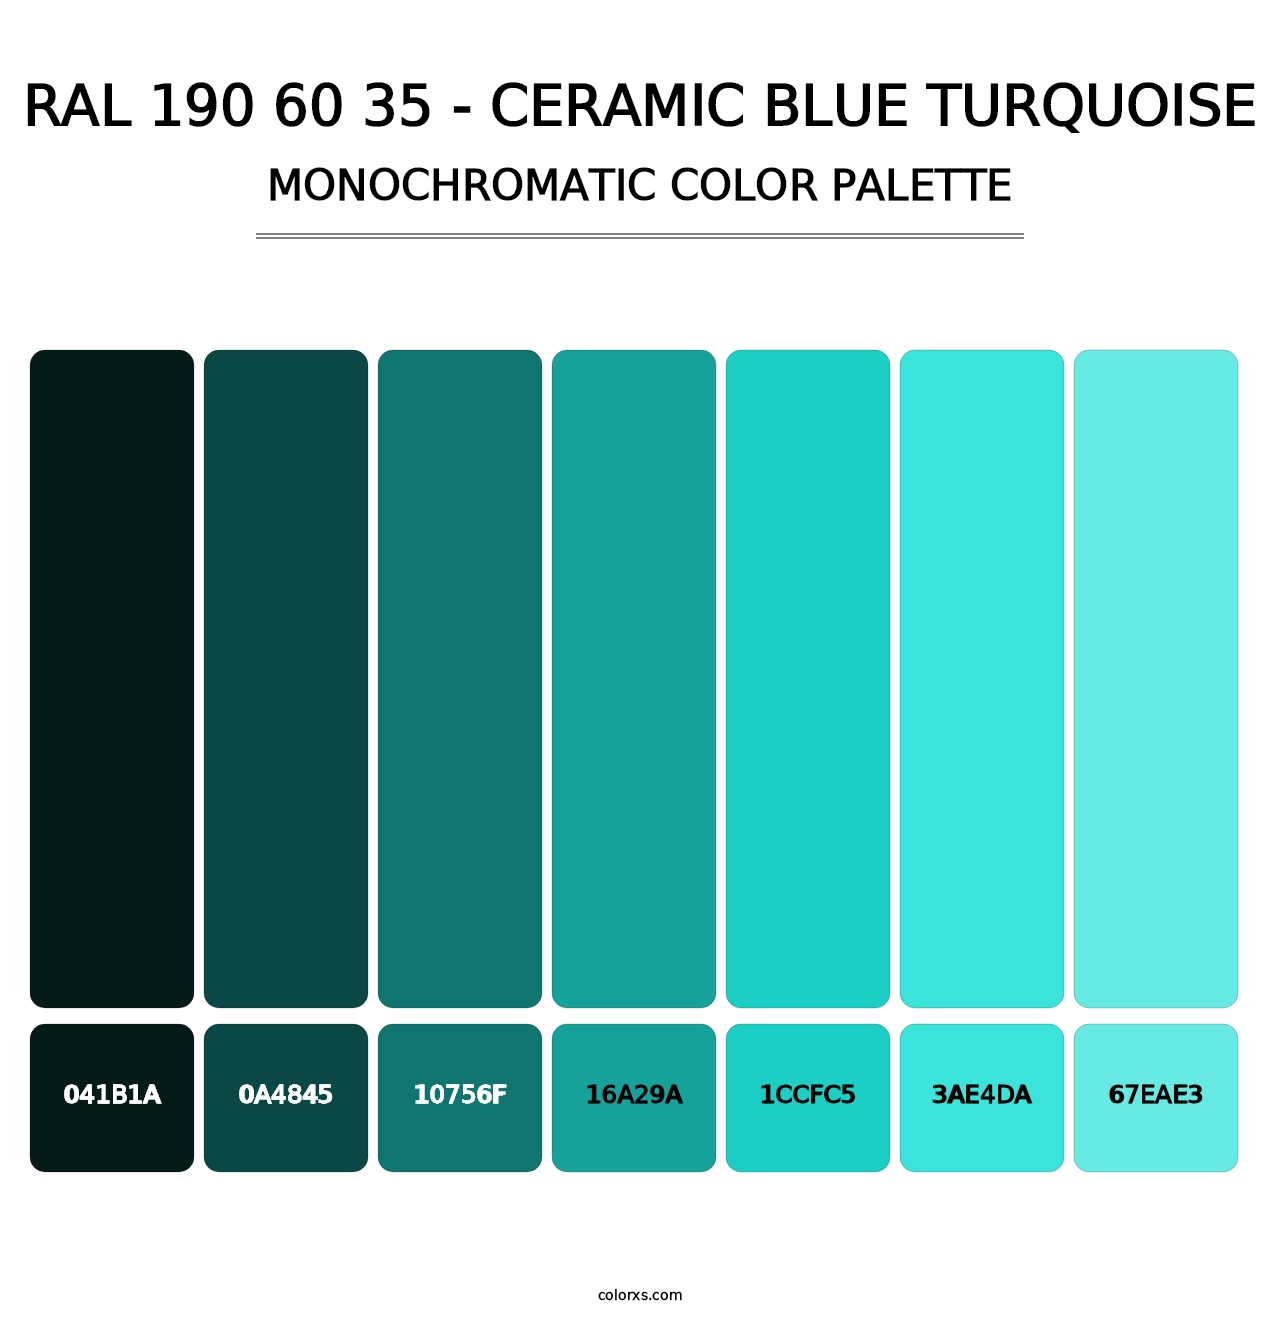 RAL 190 60 35 - Ceramic Blue Turquoise - Monochromatic Color Palette